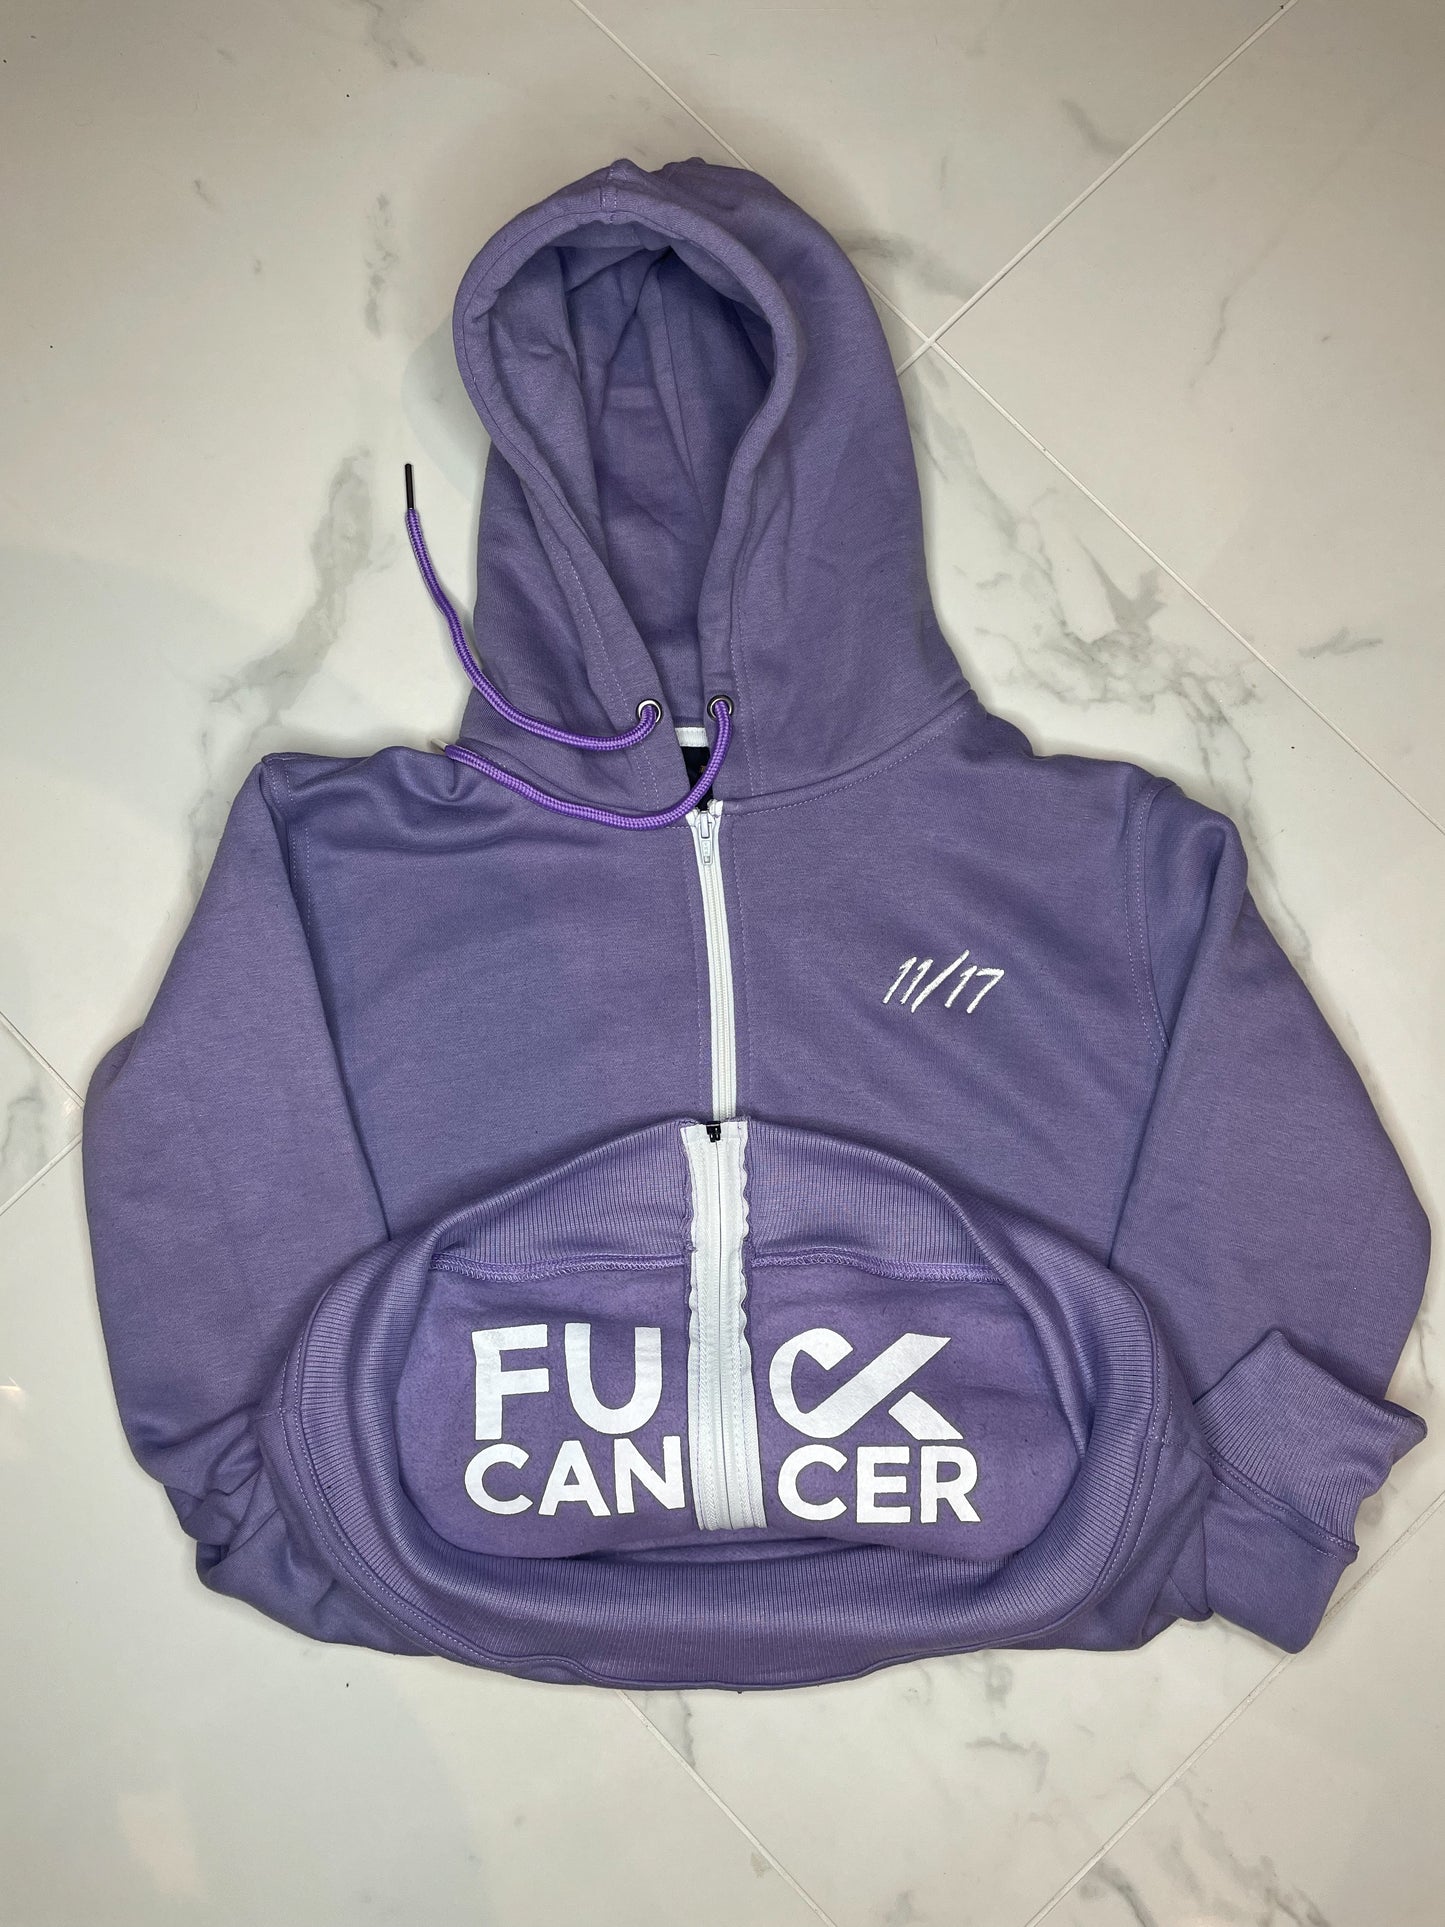 Pancreatic Cancer Awareness Hoodie/ Zip Up